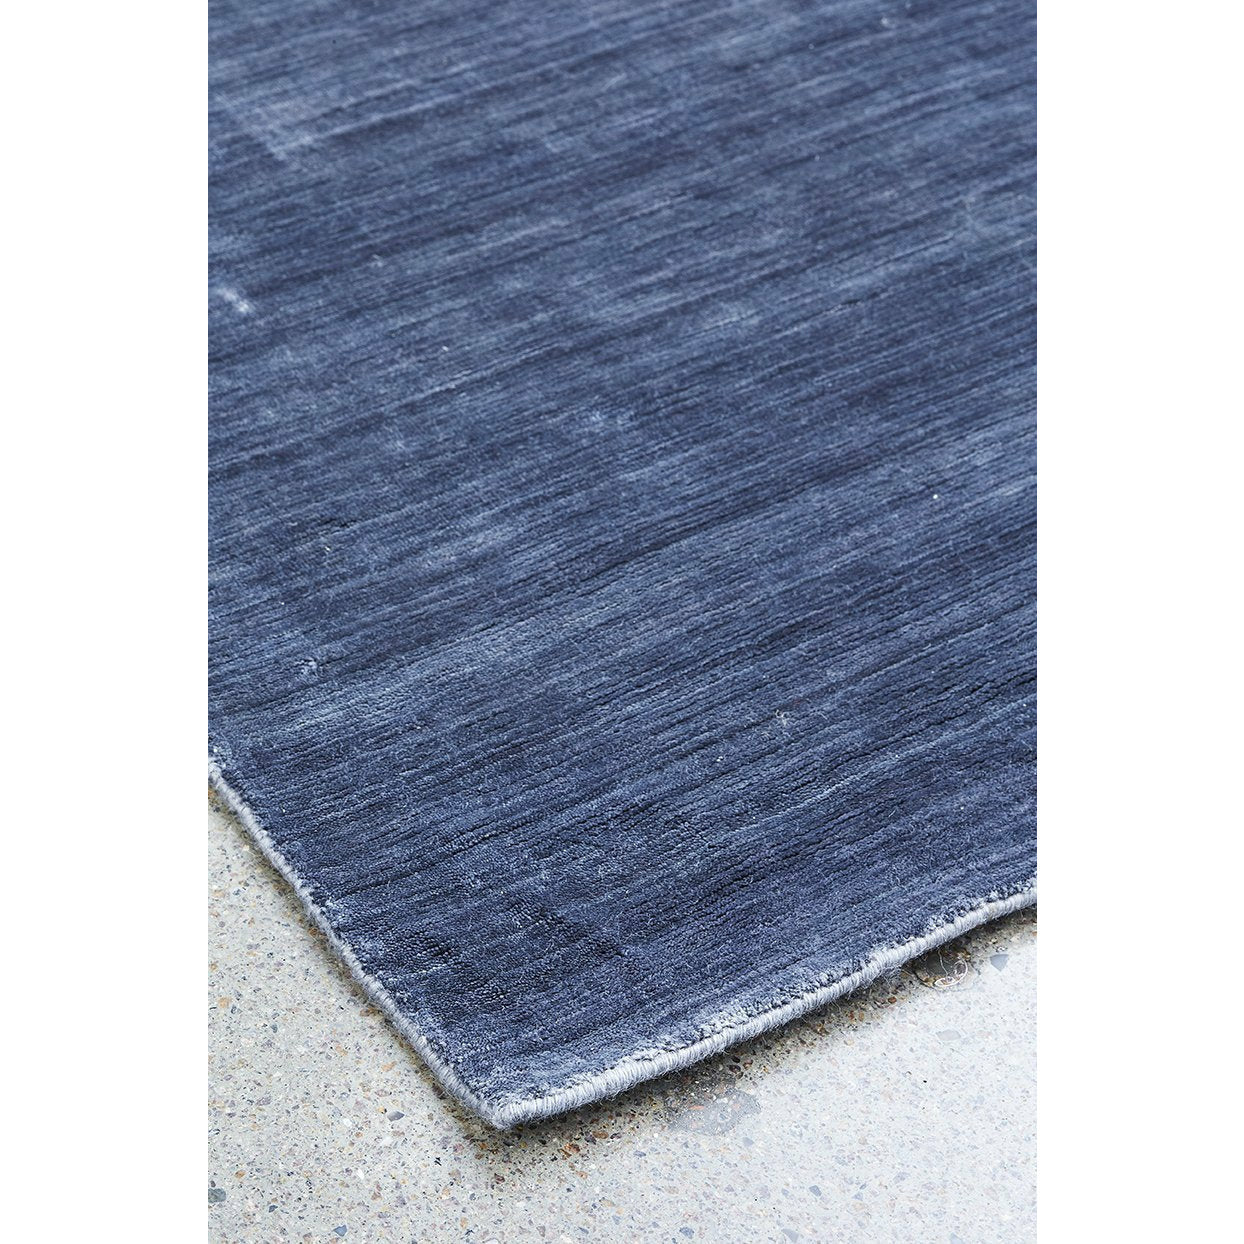 Massimo Bambu mattan stål svart, 250x300 cm